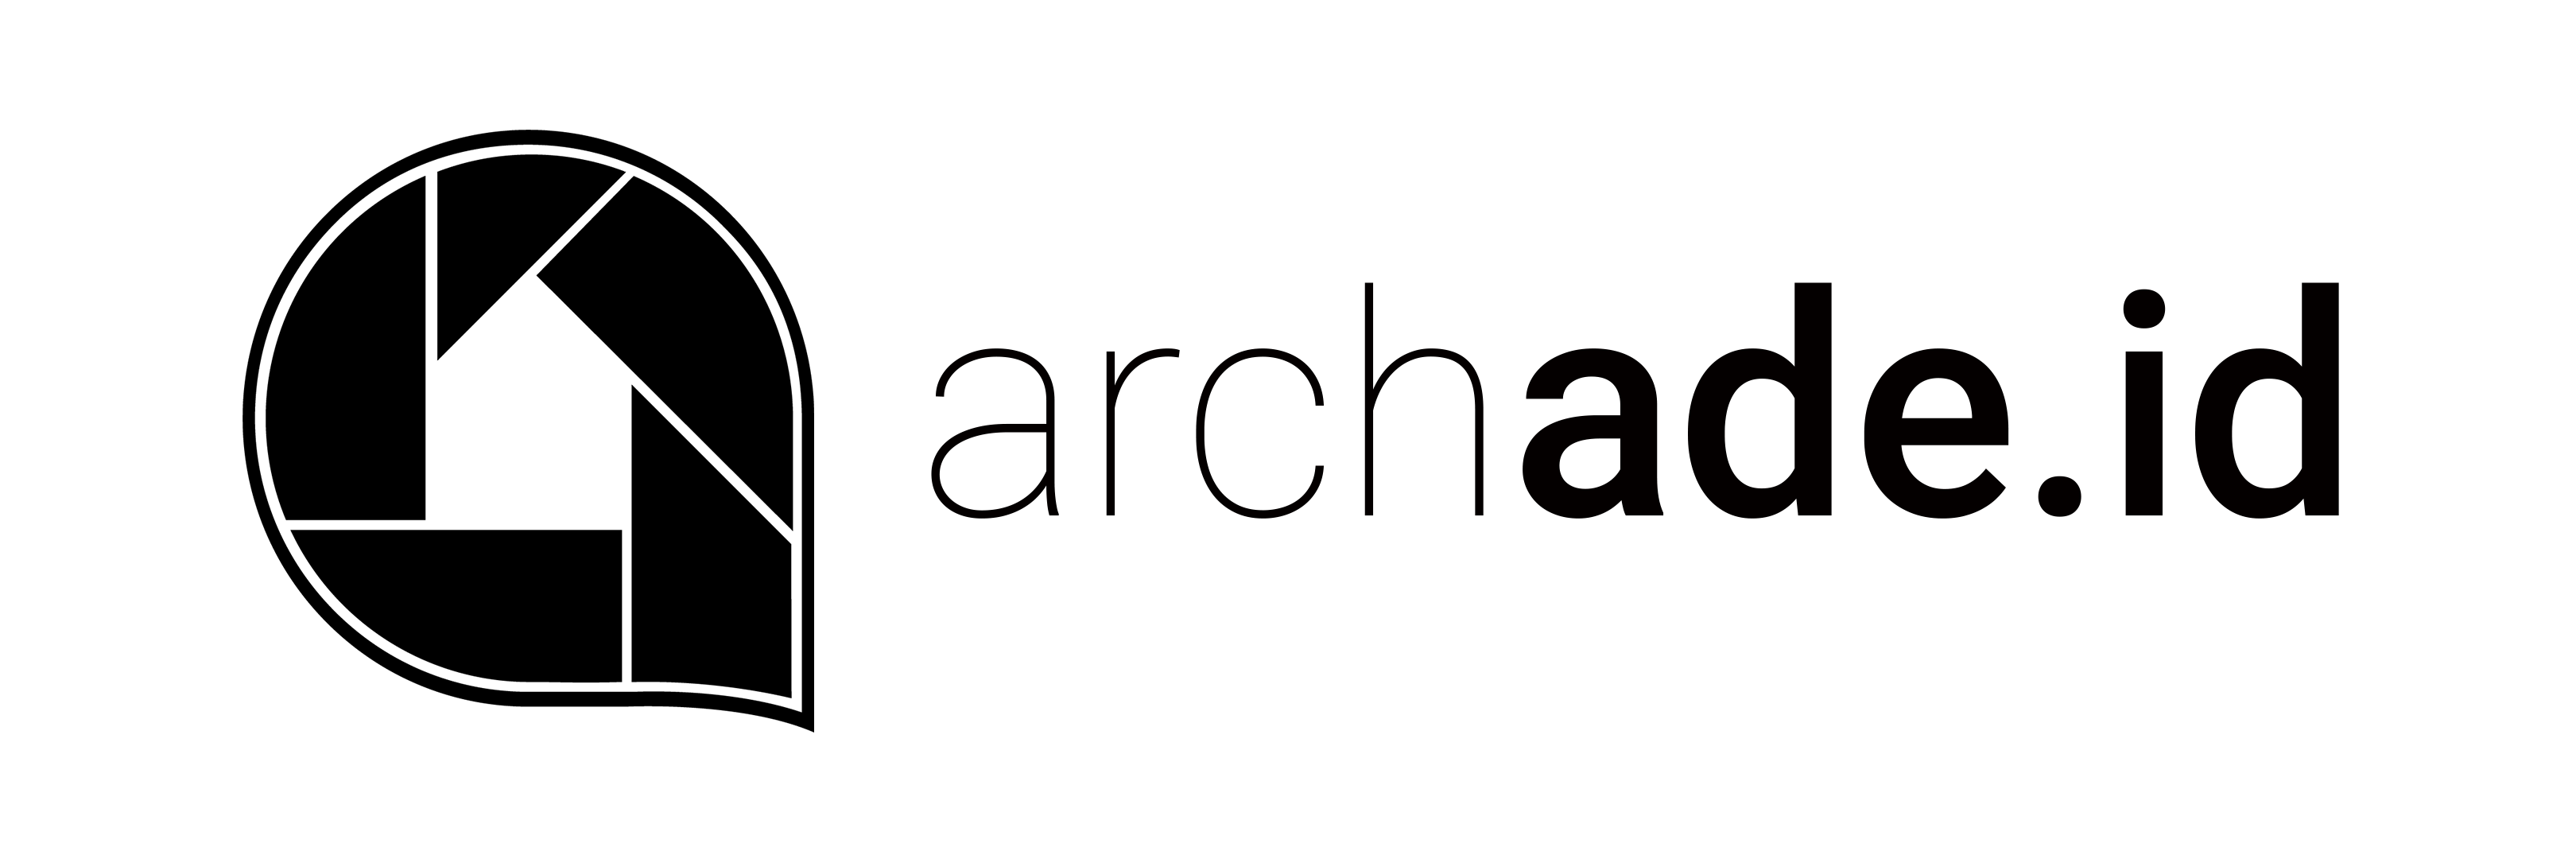 logo vertikal black ARCHADE